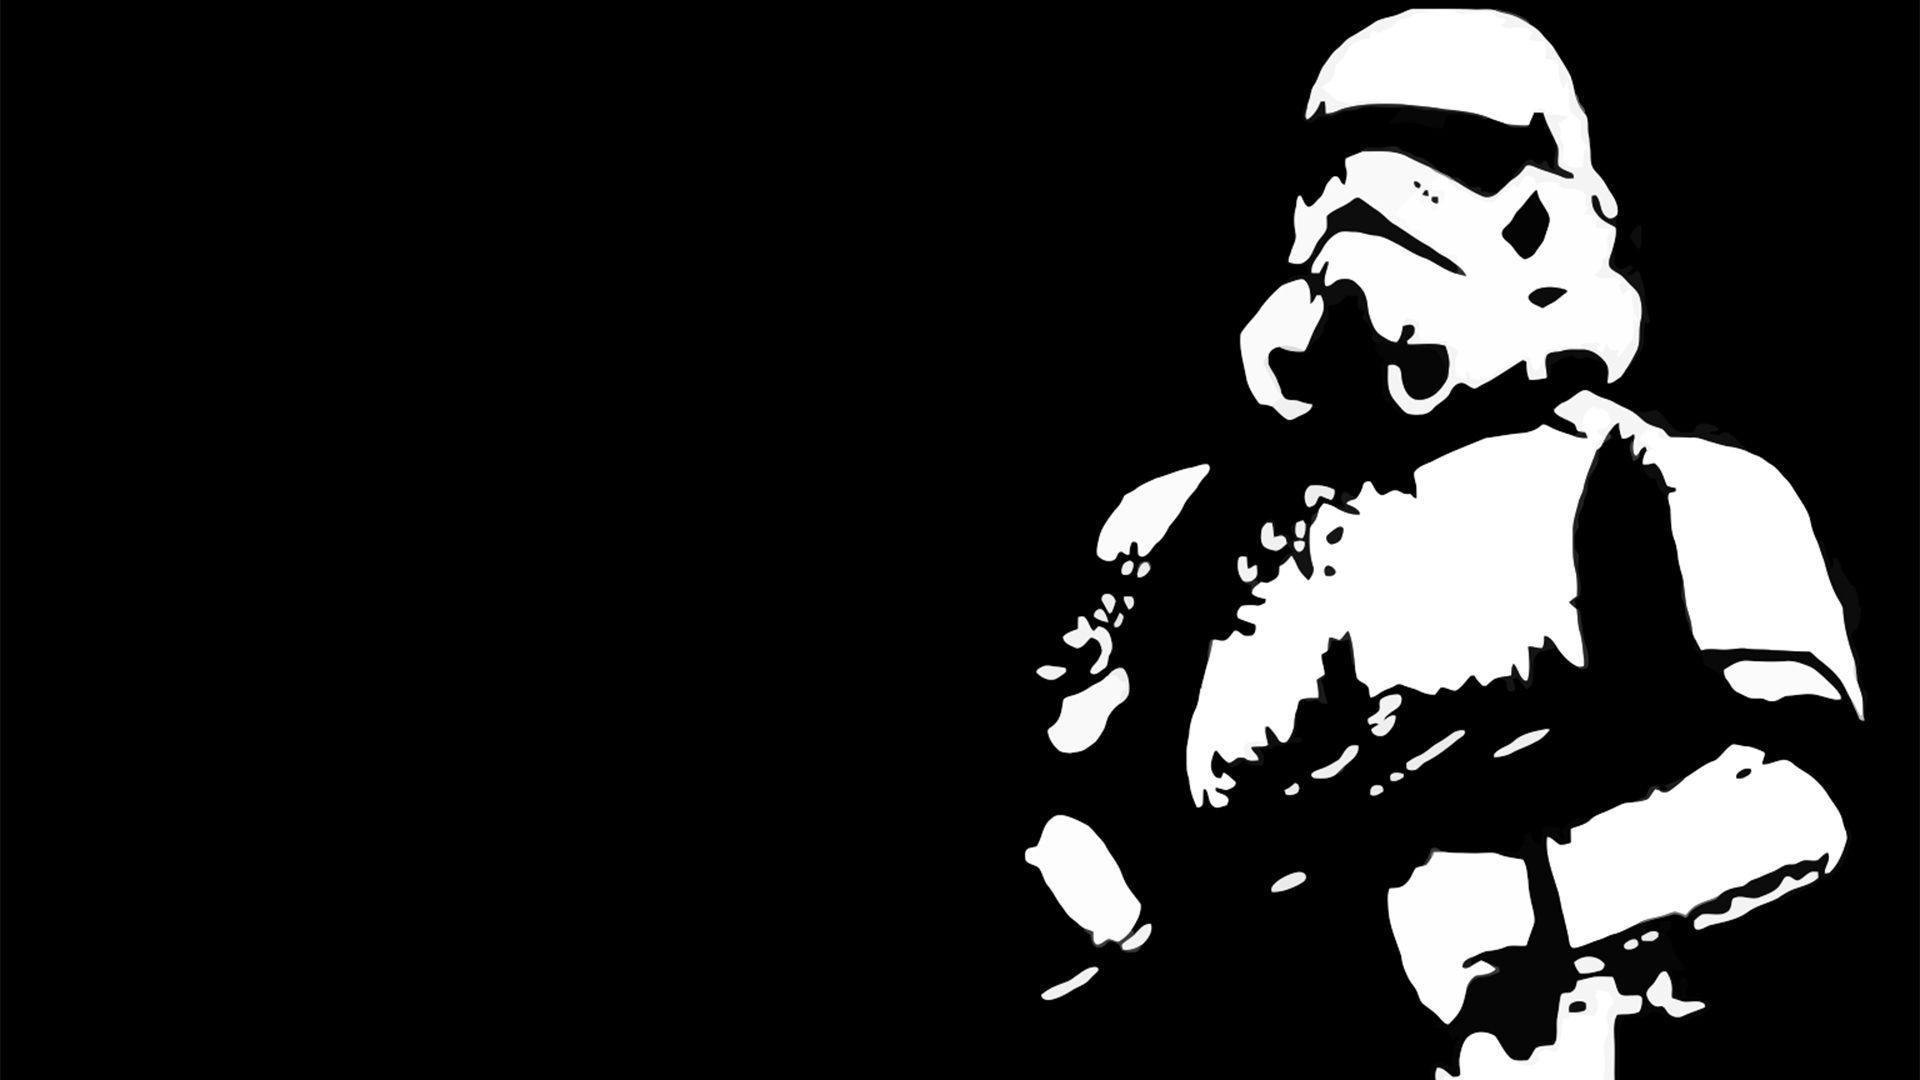 Star Wars Stormtrooper Wallpaper And White Stormtrooper